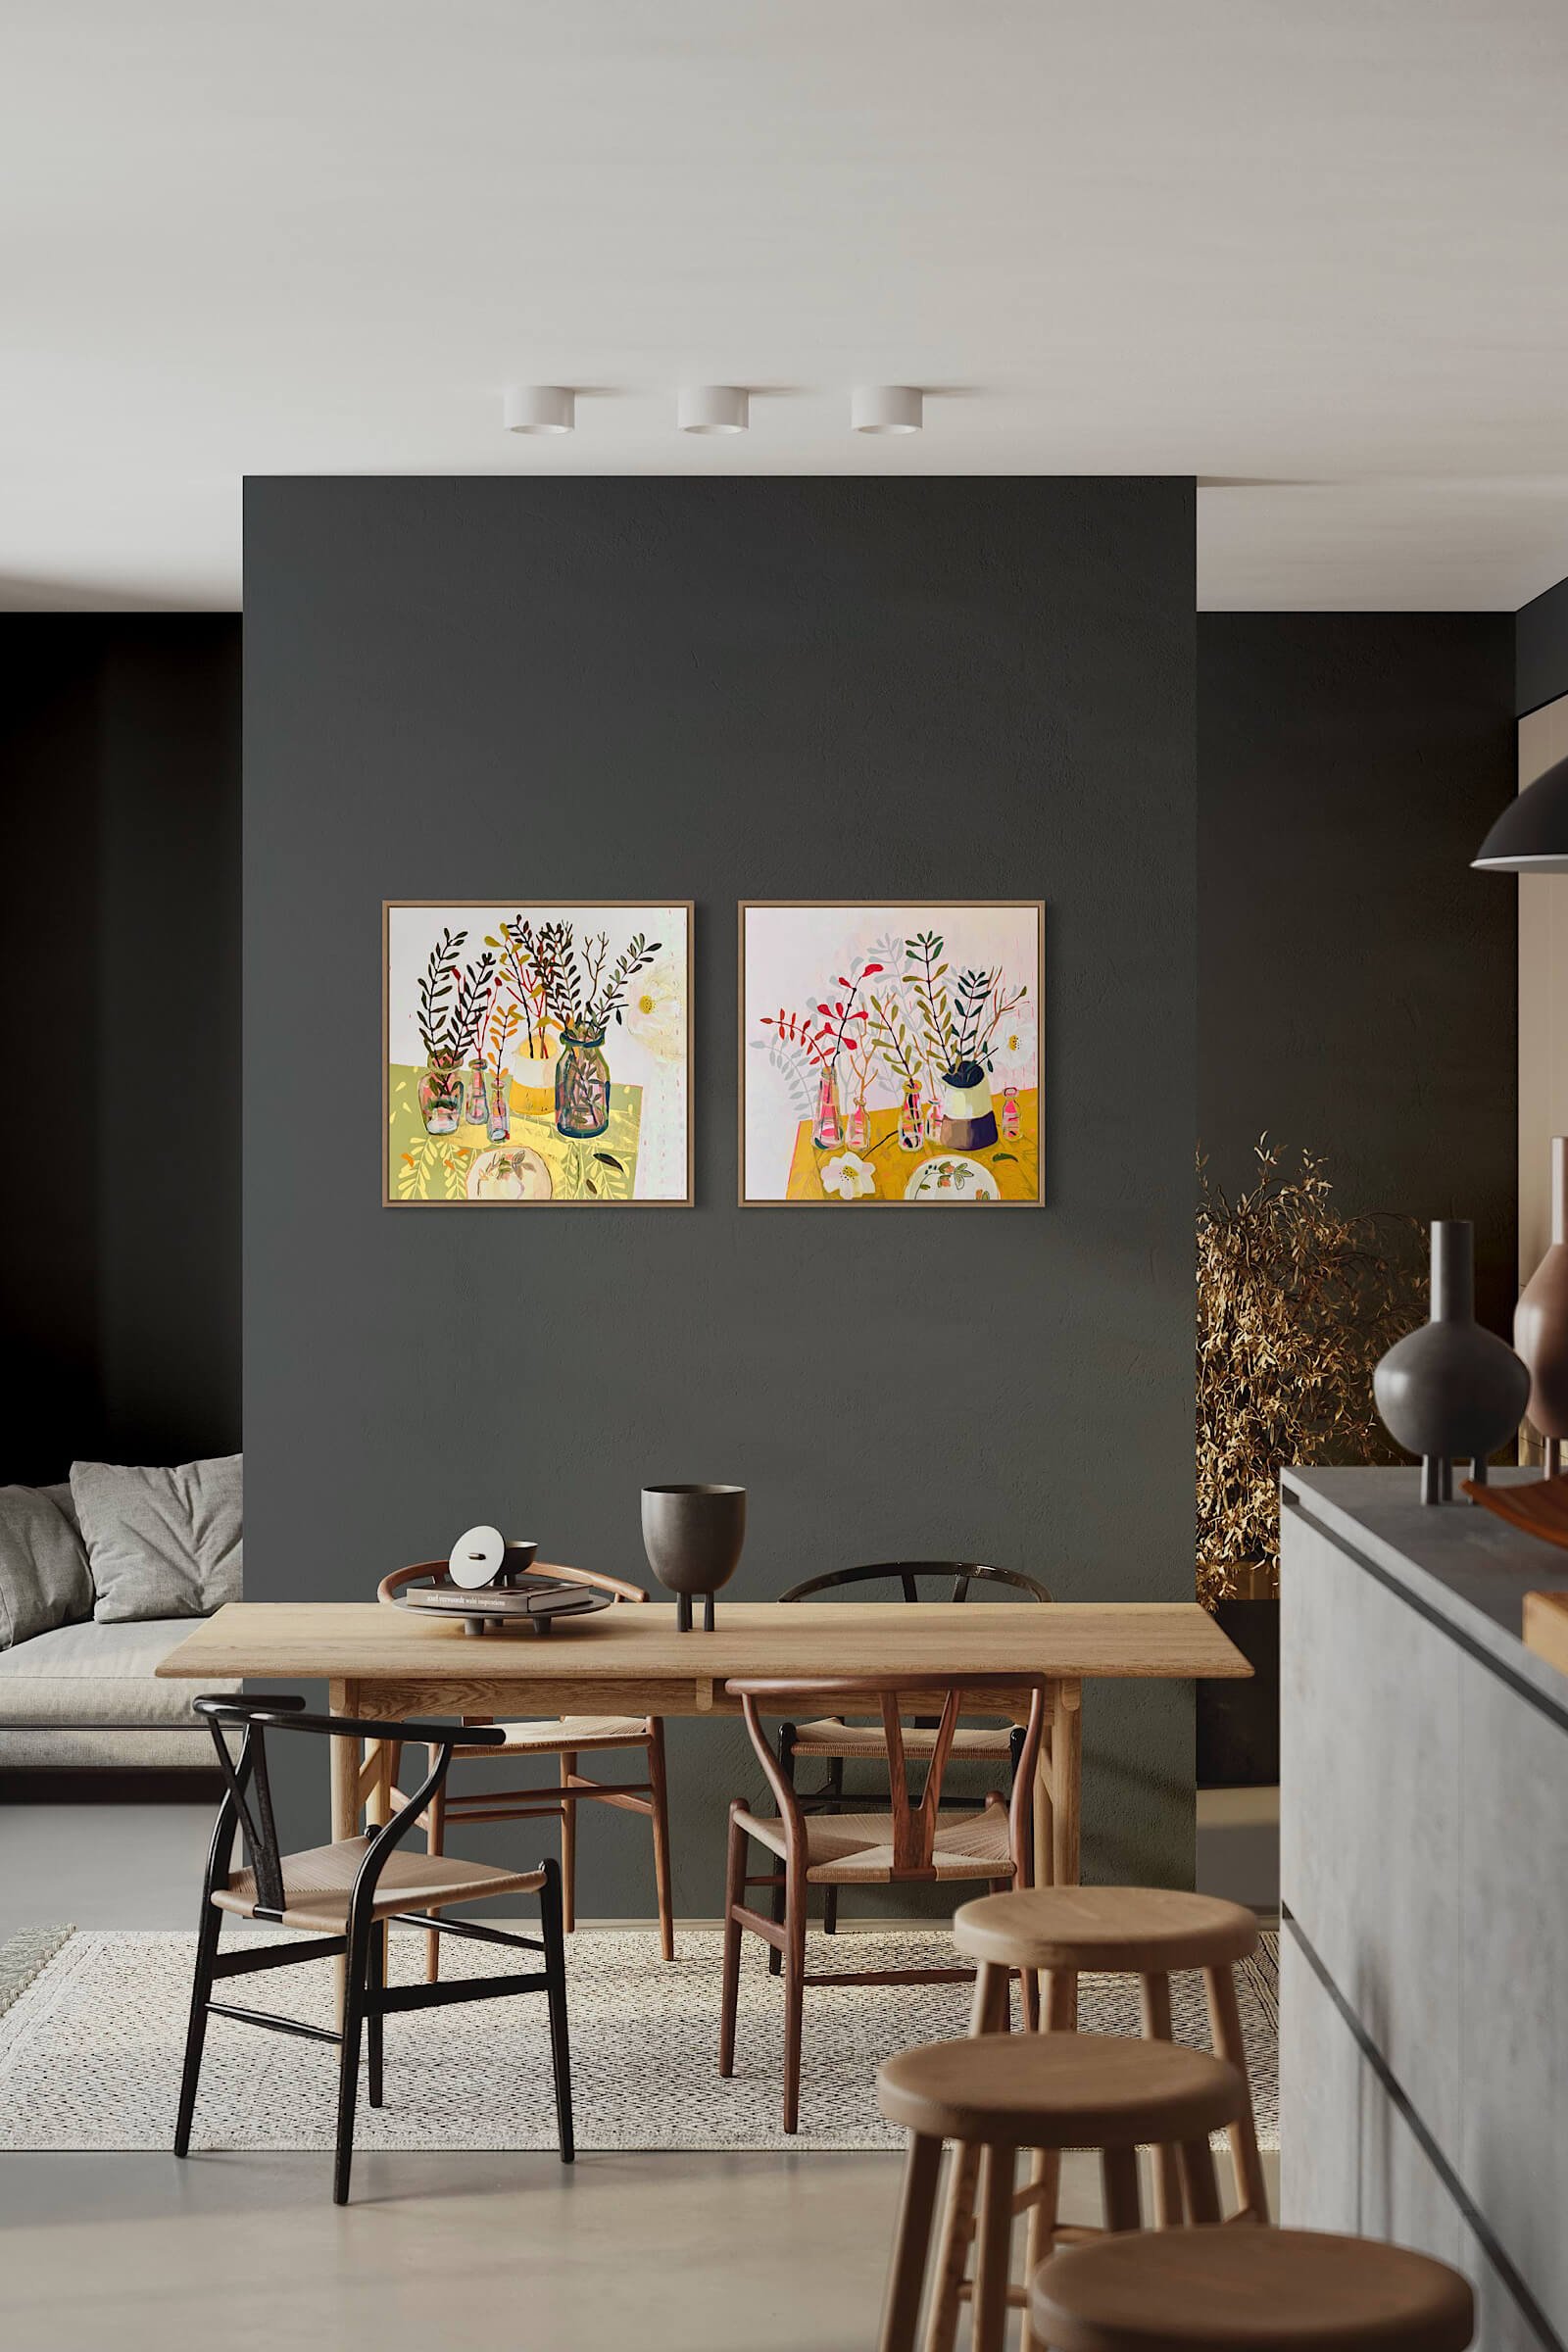 Ali Mackie Art Lustre & Peach Melba in Modern Timber Kitchen Diner with Black 01 Lick Paint 01 web.jpeg